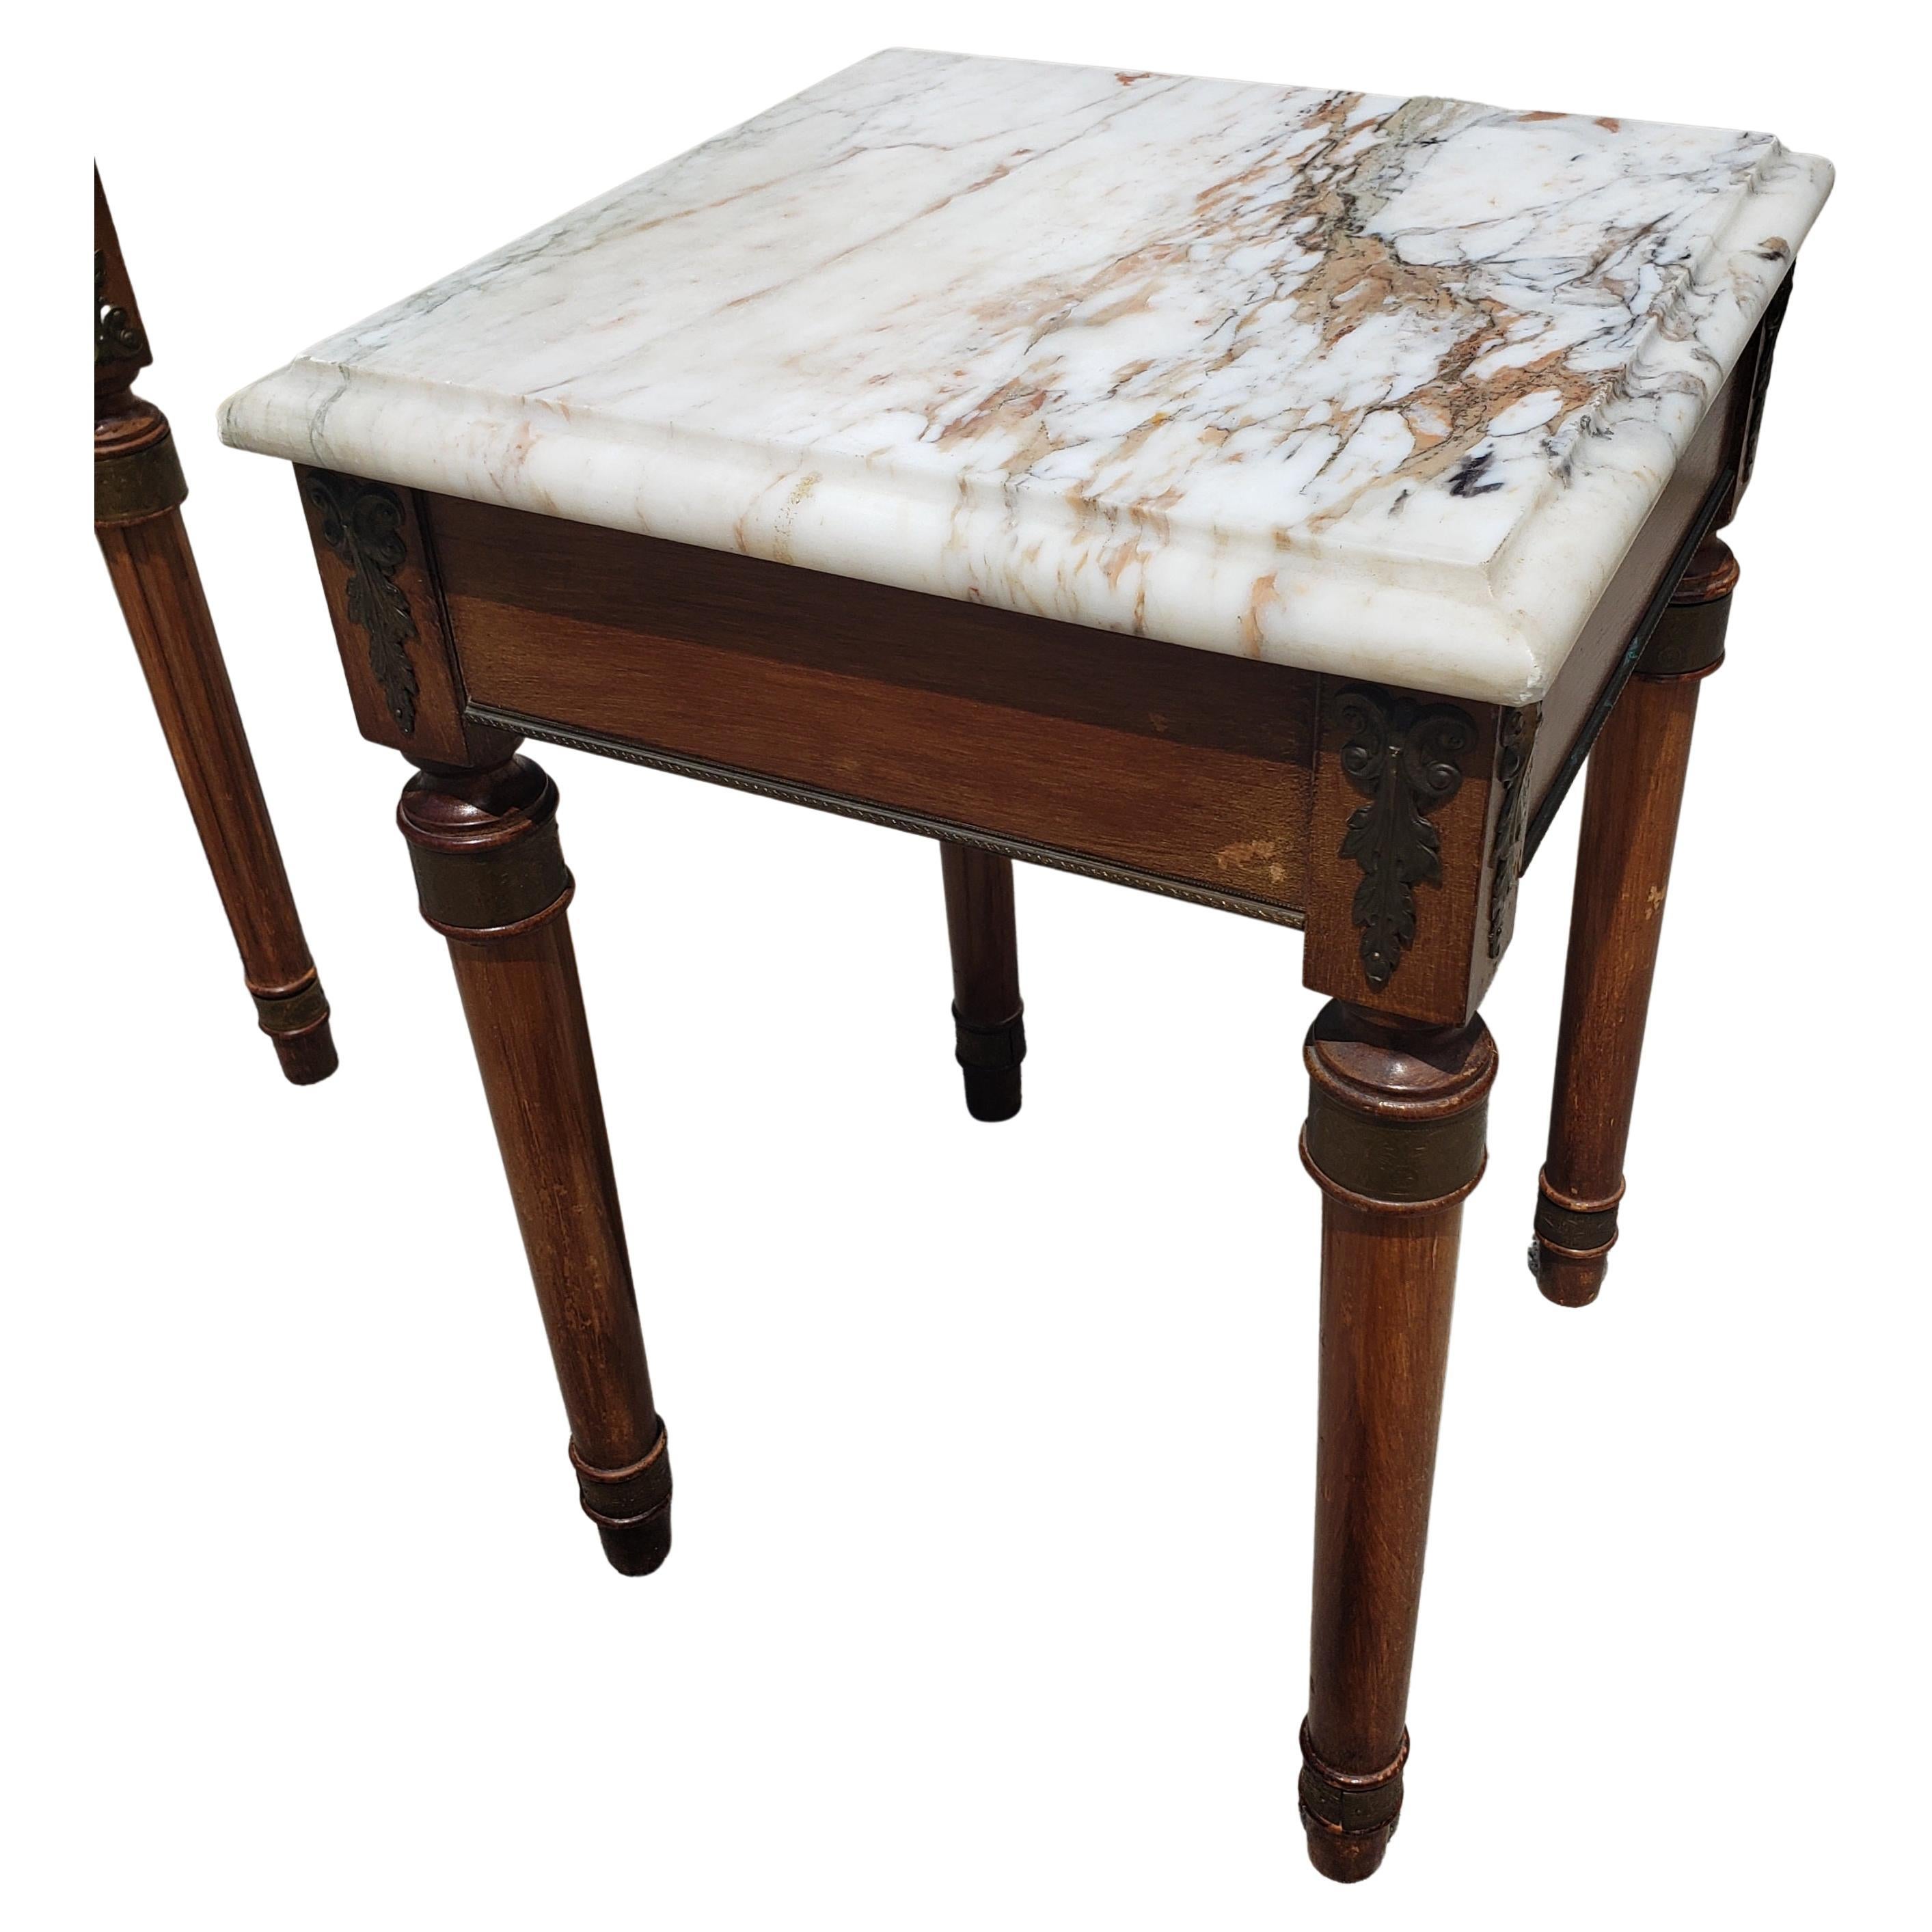 wooden corner table